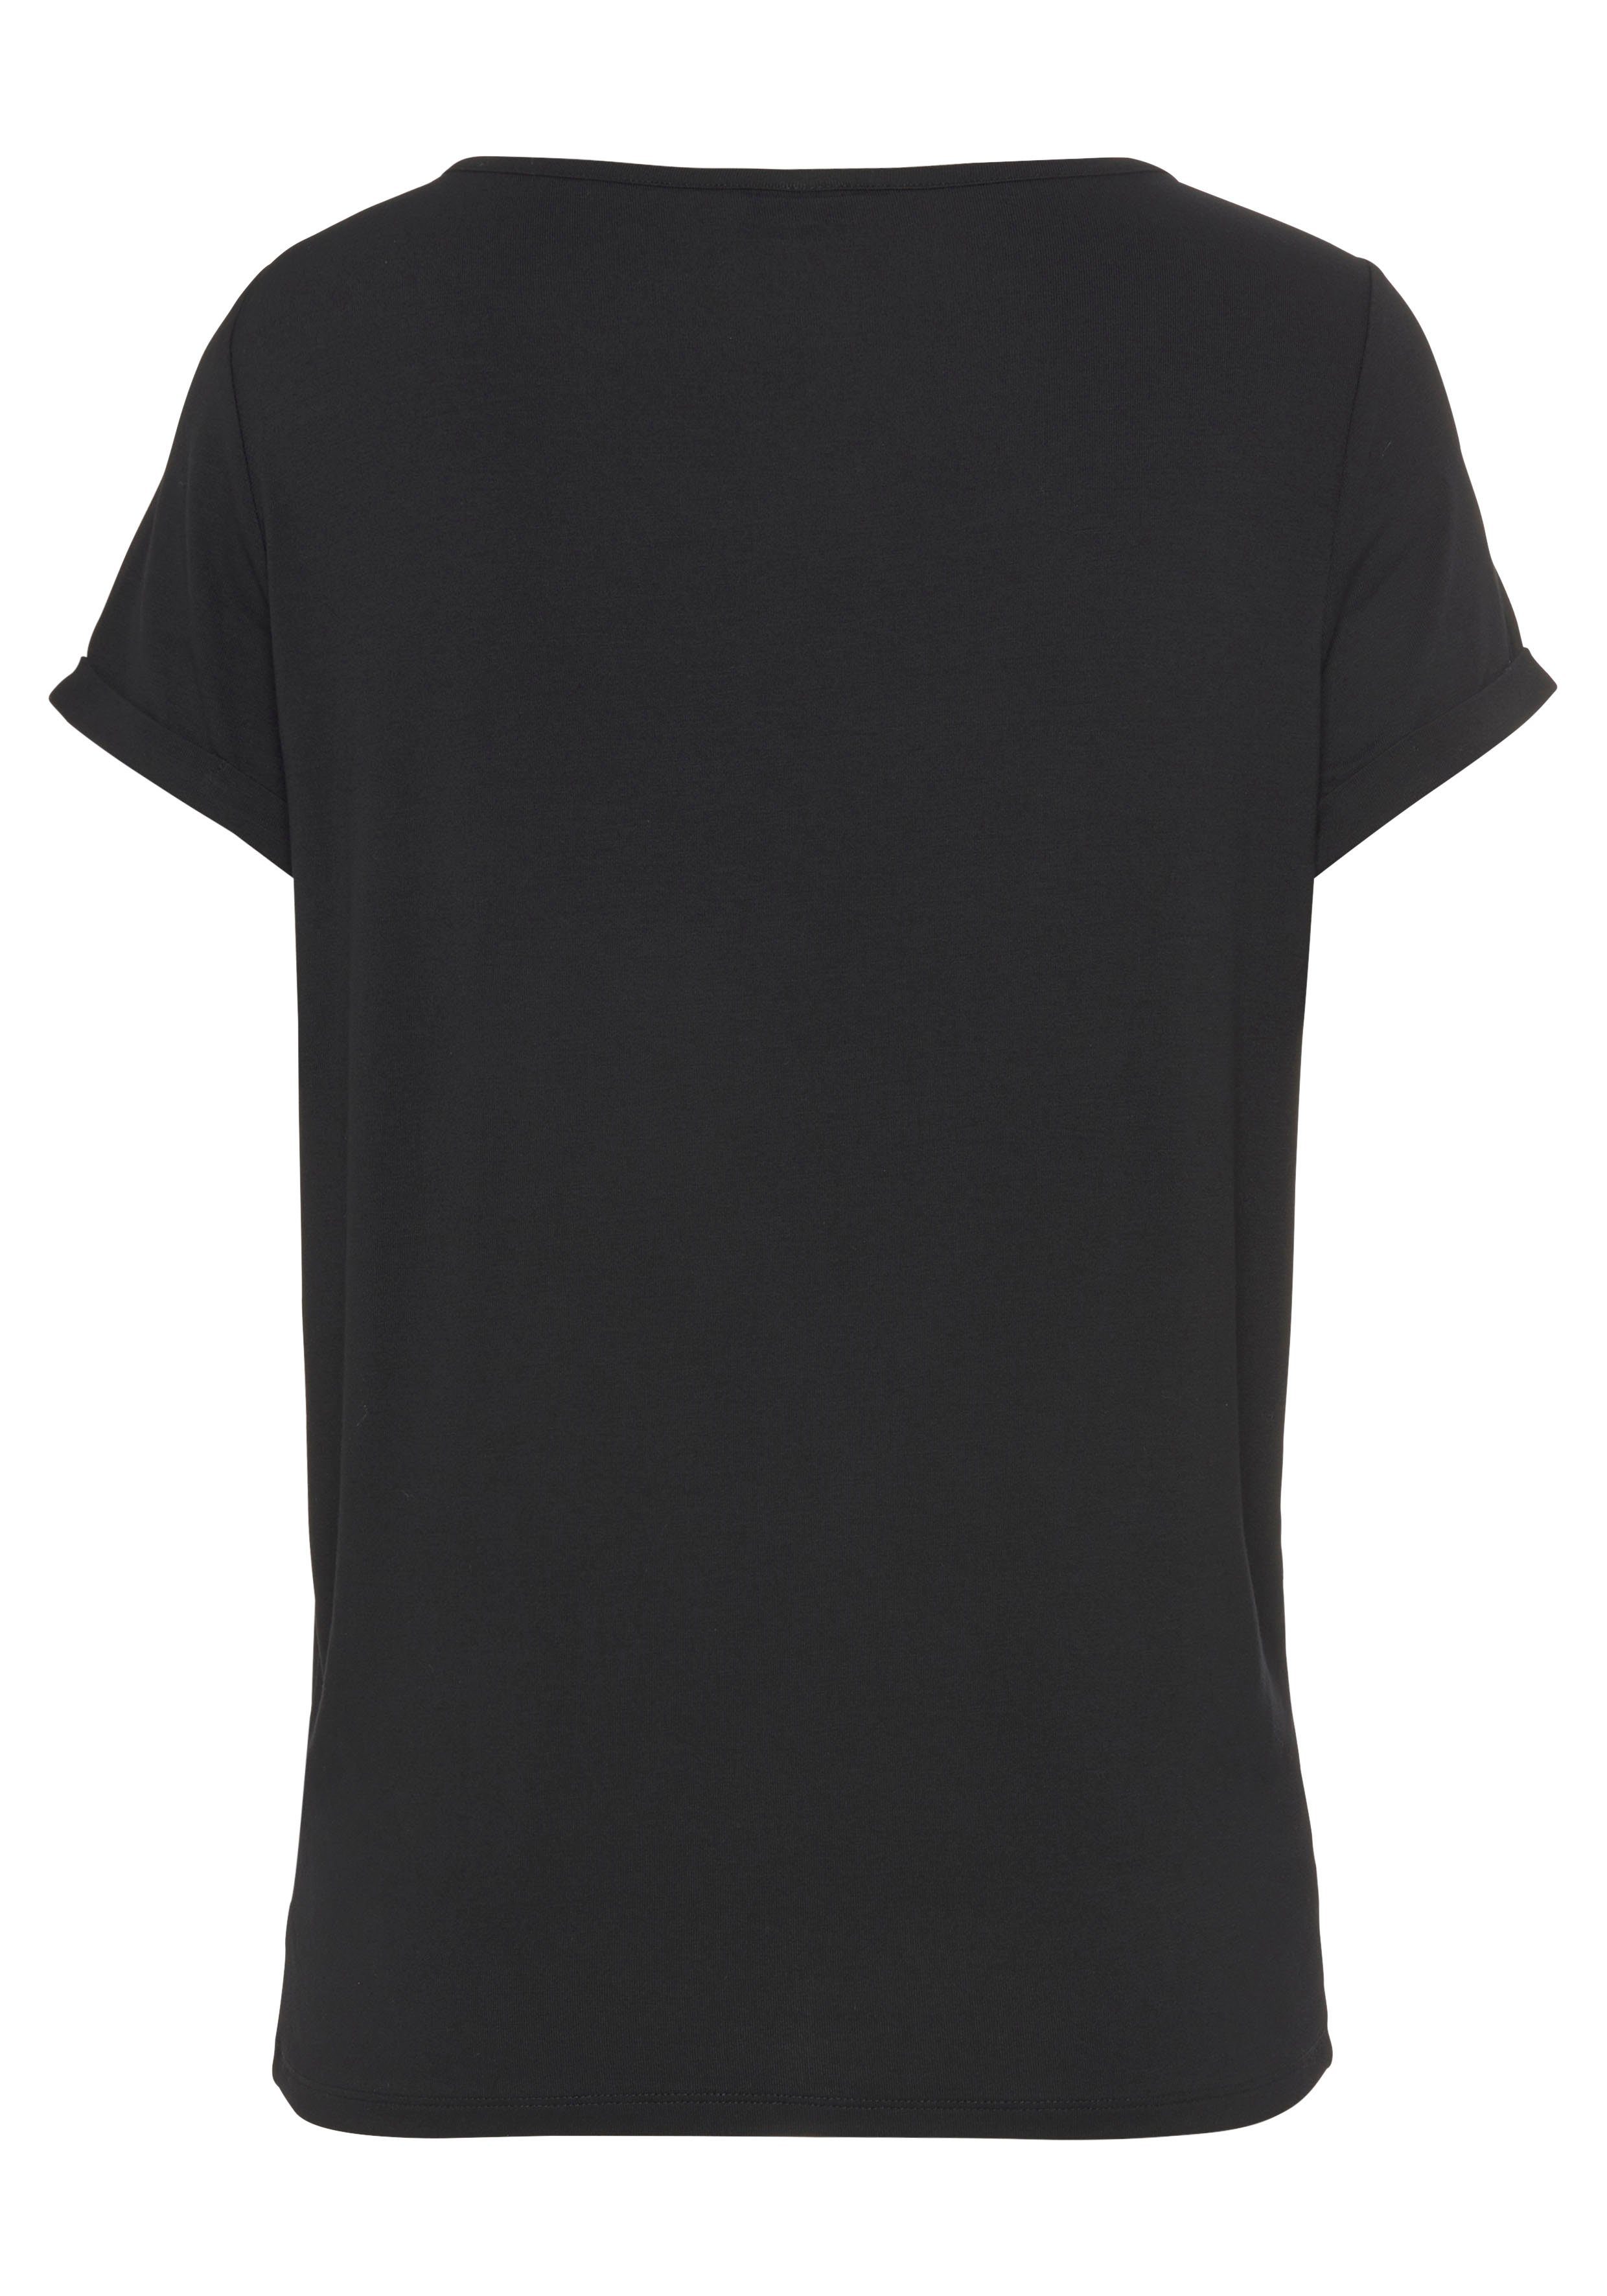 Schwarz weicher Viscosemischung aus LASCANA T-Shirt